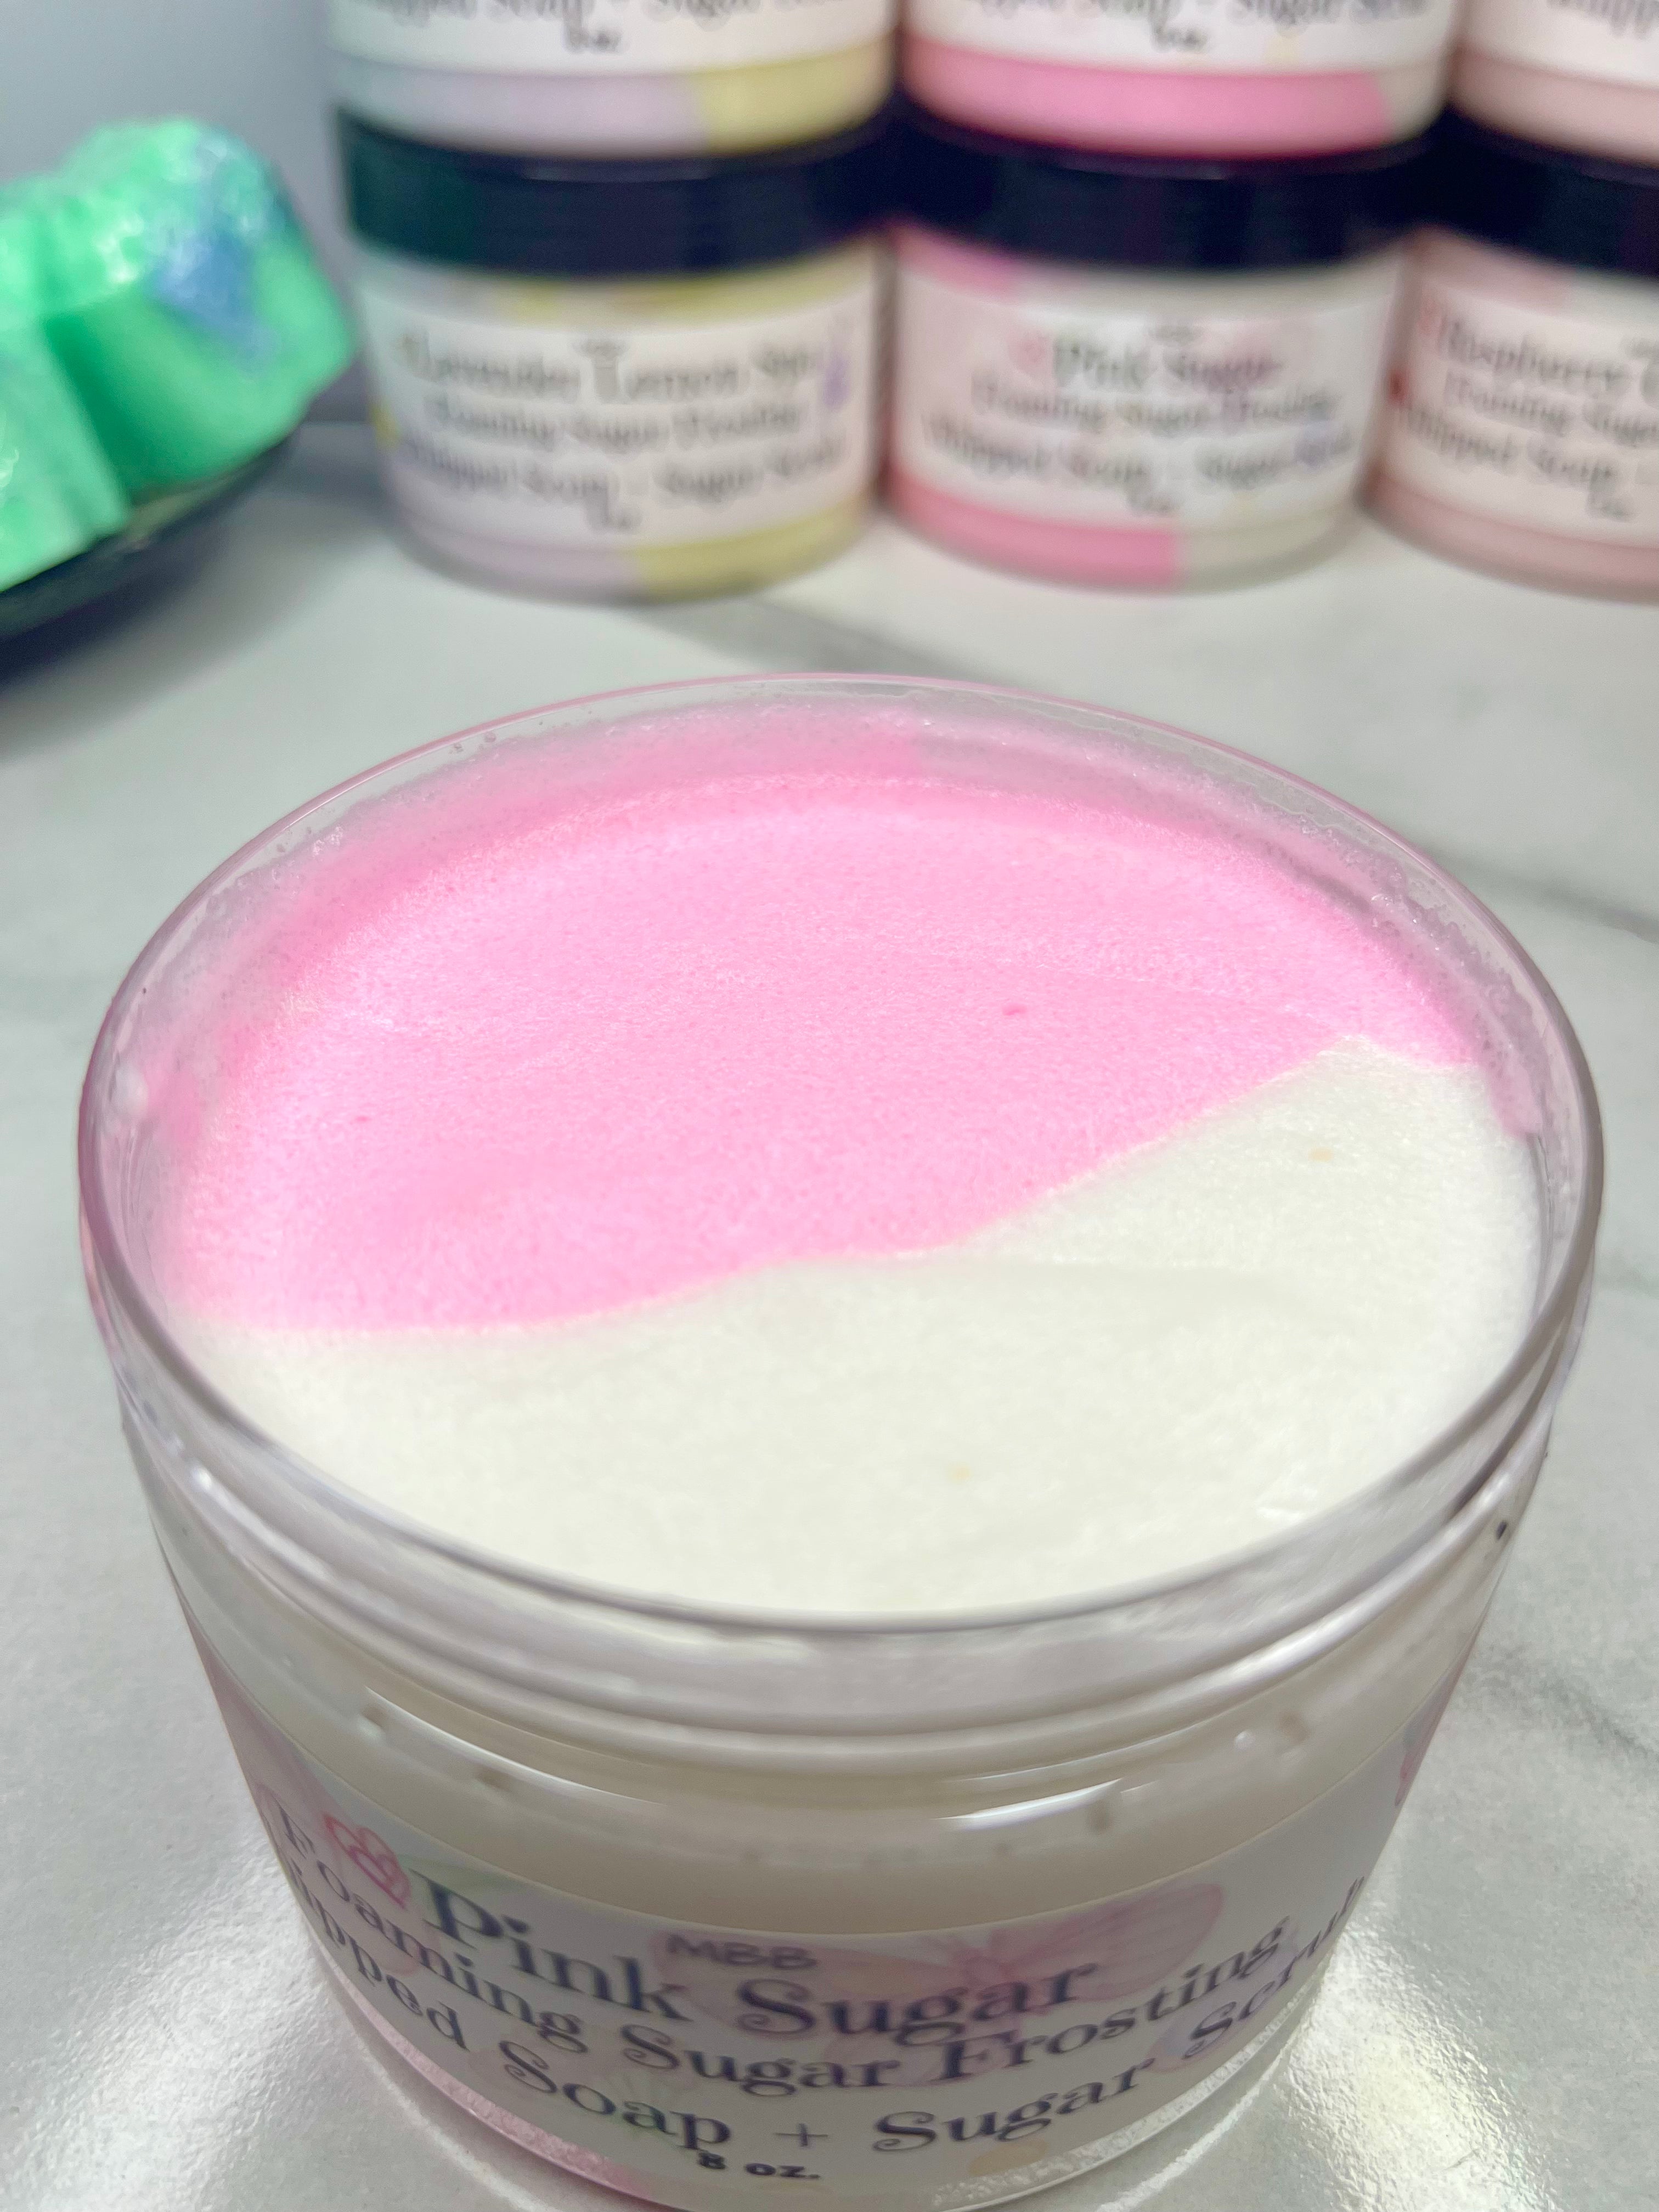 Pink Sugar Foaming Shower Frosting | Whipped Soap and Sugar Scrub | Sugar Scrub